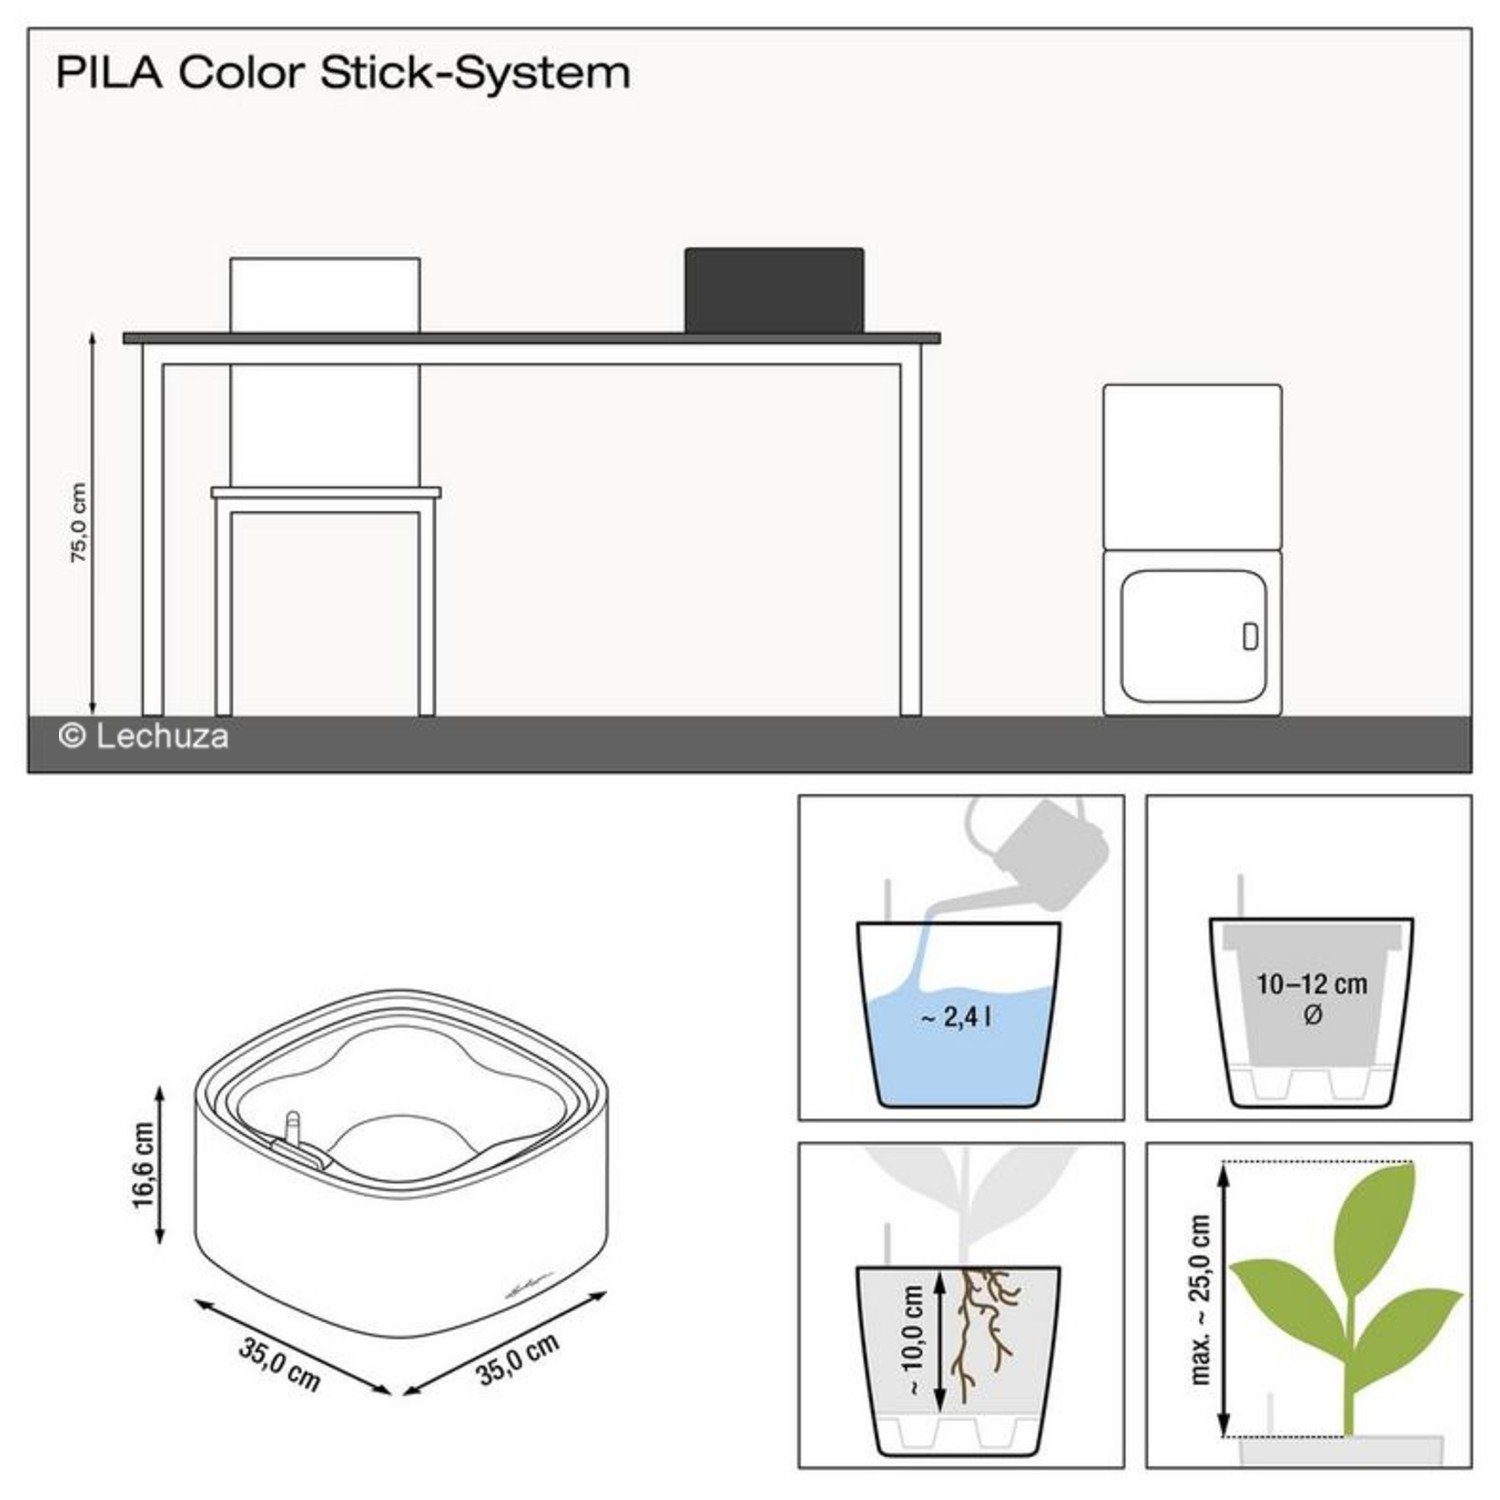 (Komplettset) Lechuza® 15948 Pila Pflanzkübel korallrot Pflanztopf Stick-System Color